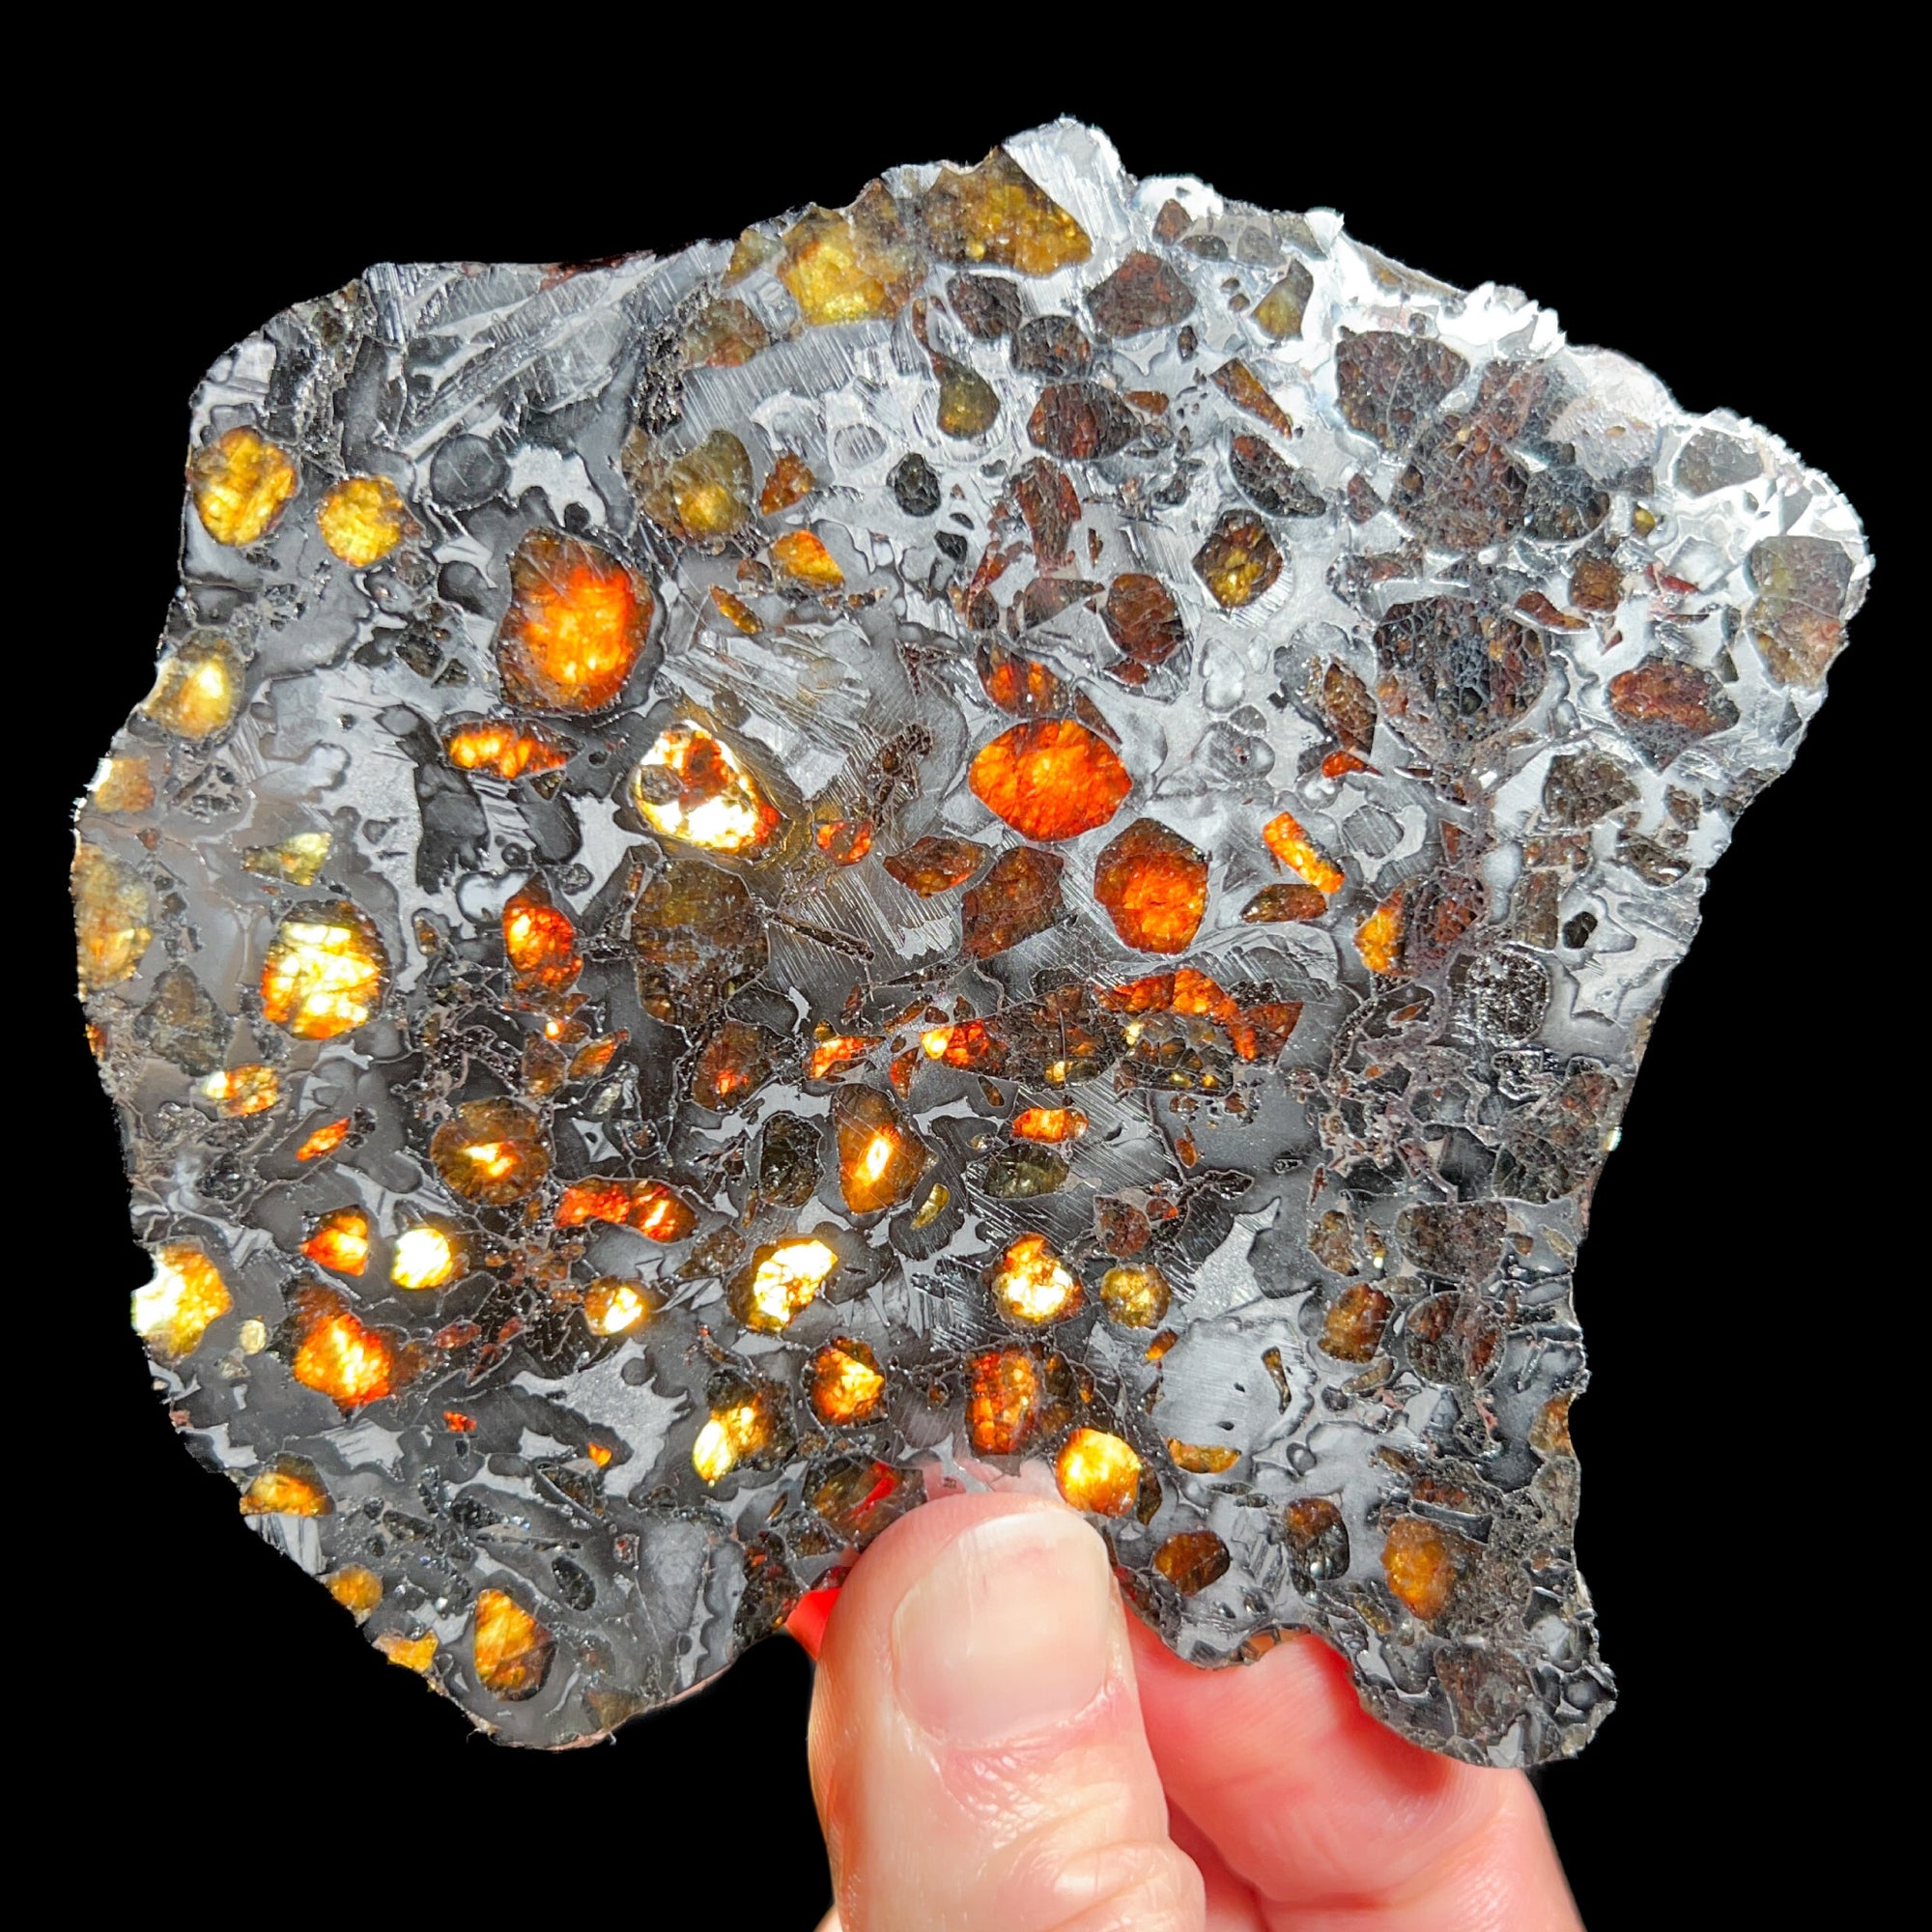 Backlit Pallasite Meteorite Displaying gem Olivine Crystals